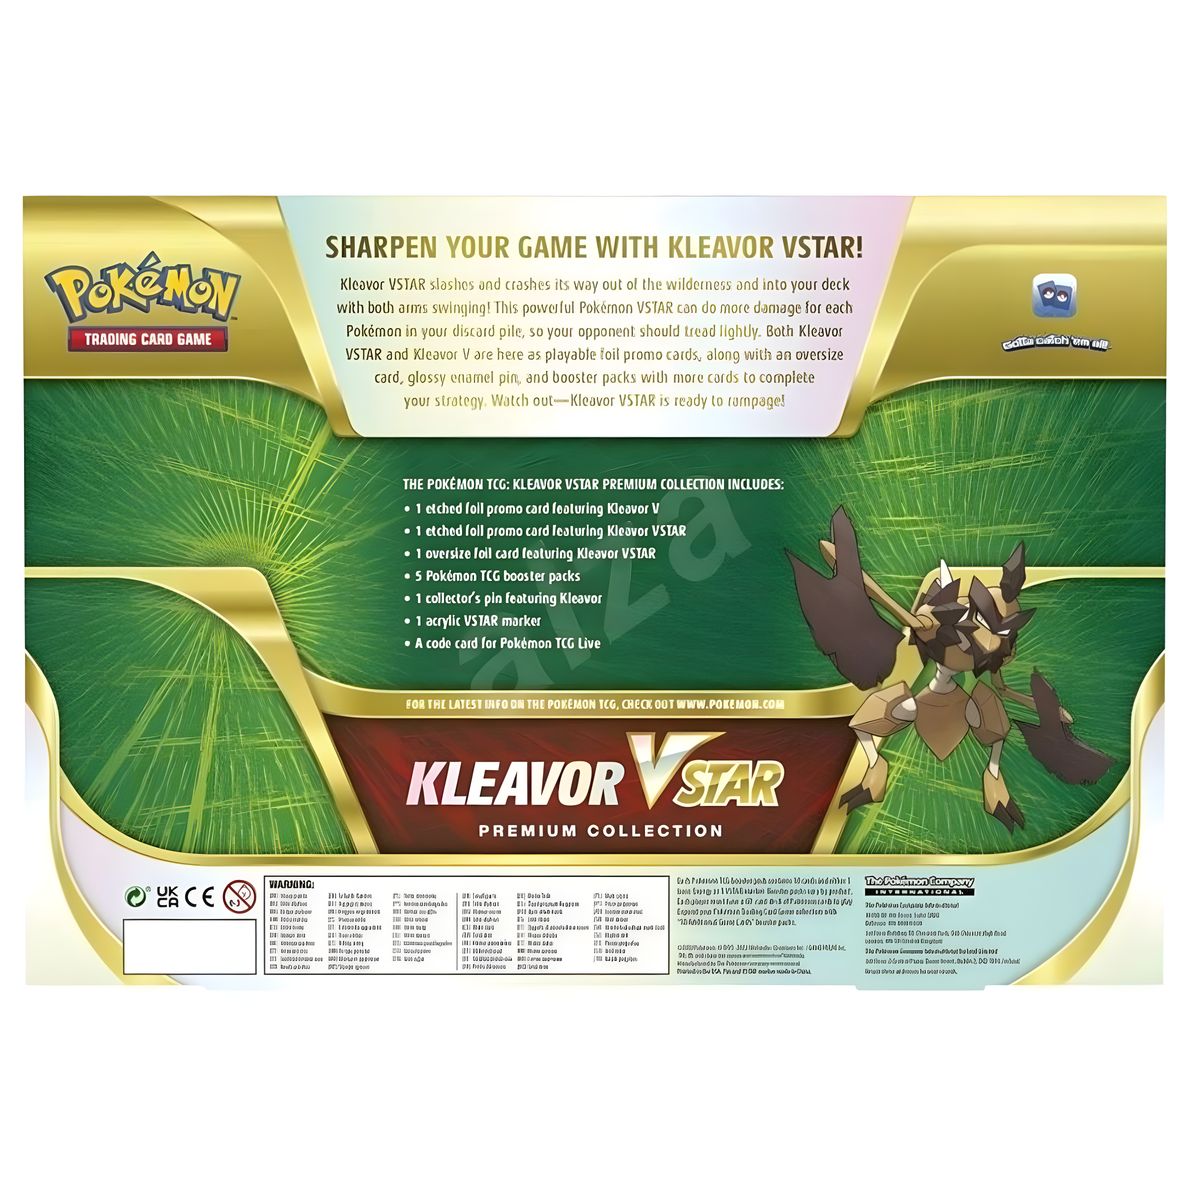 Pokémon - Kleavor VSTAR Premium Collection